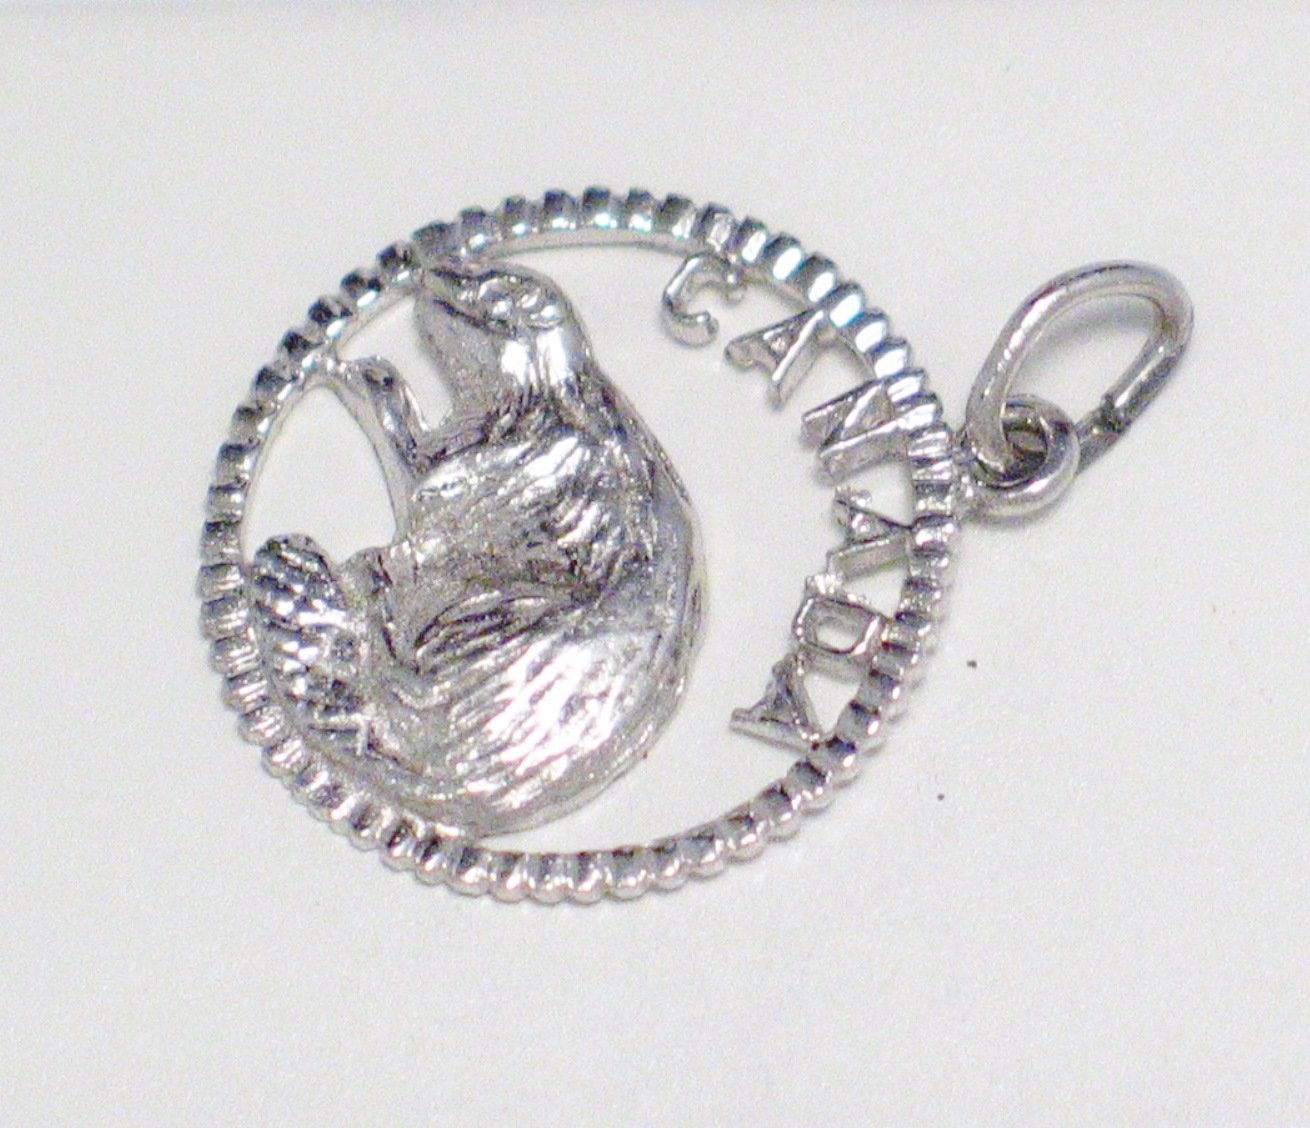 Charm, Sterling Silver Medallion Style Canada Beaver Bracelet Charm or Pendant